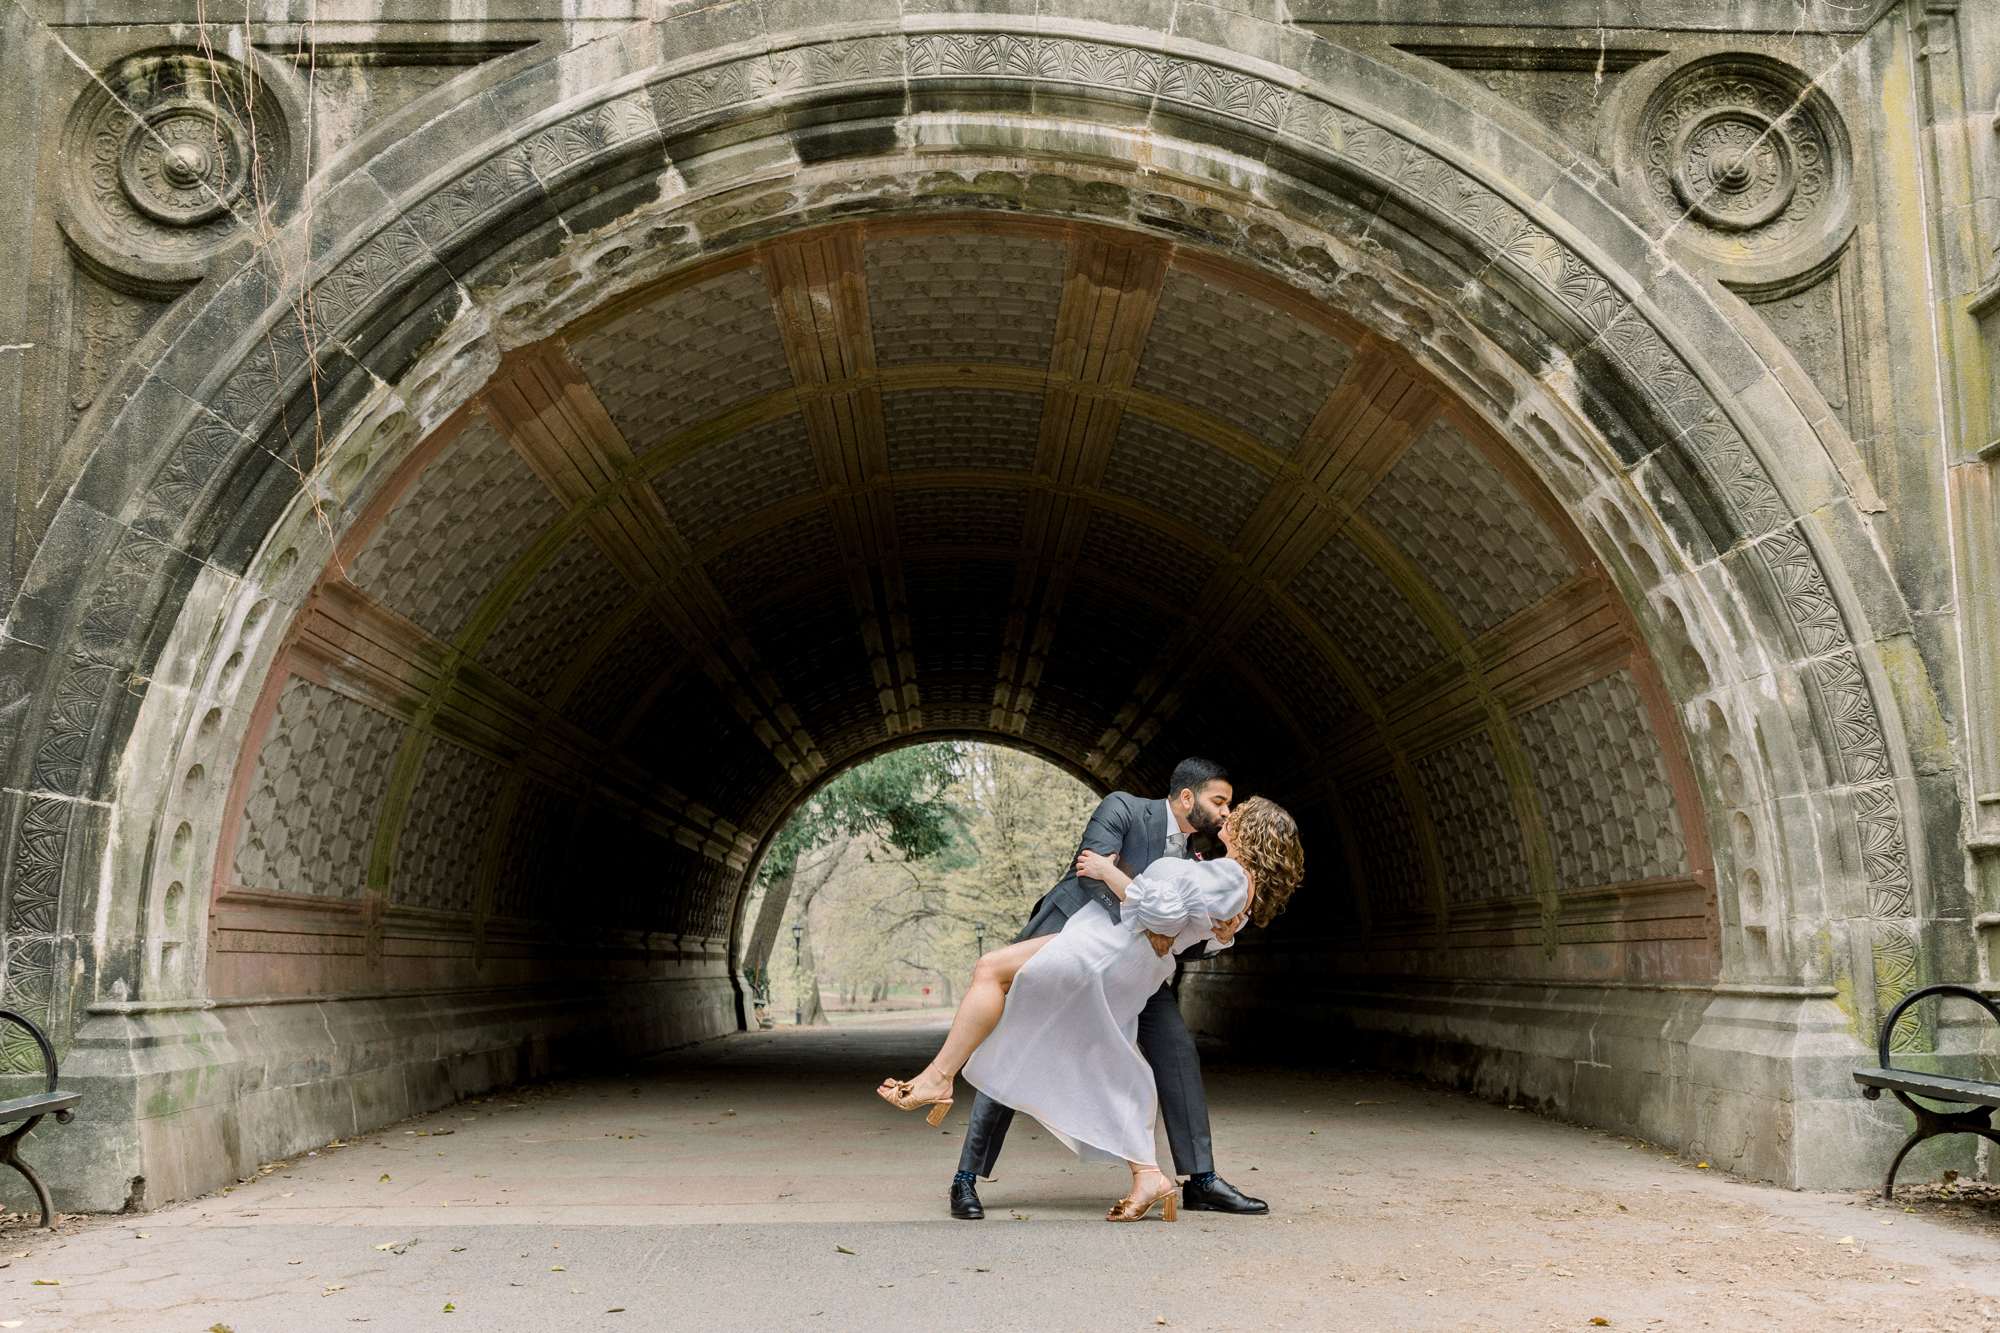 Iconic Prospect Park Wedding Photos with Springtime Cherry Blossoms